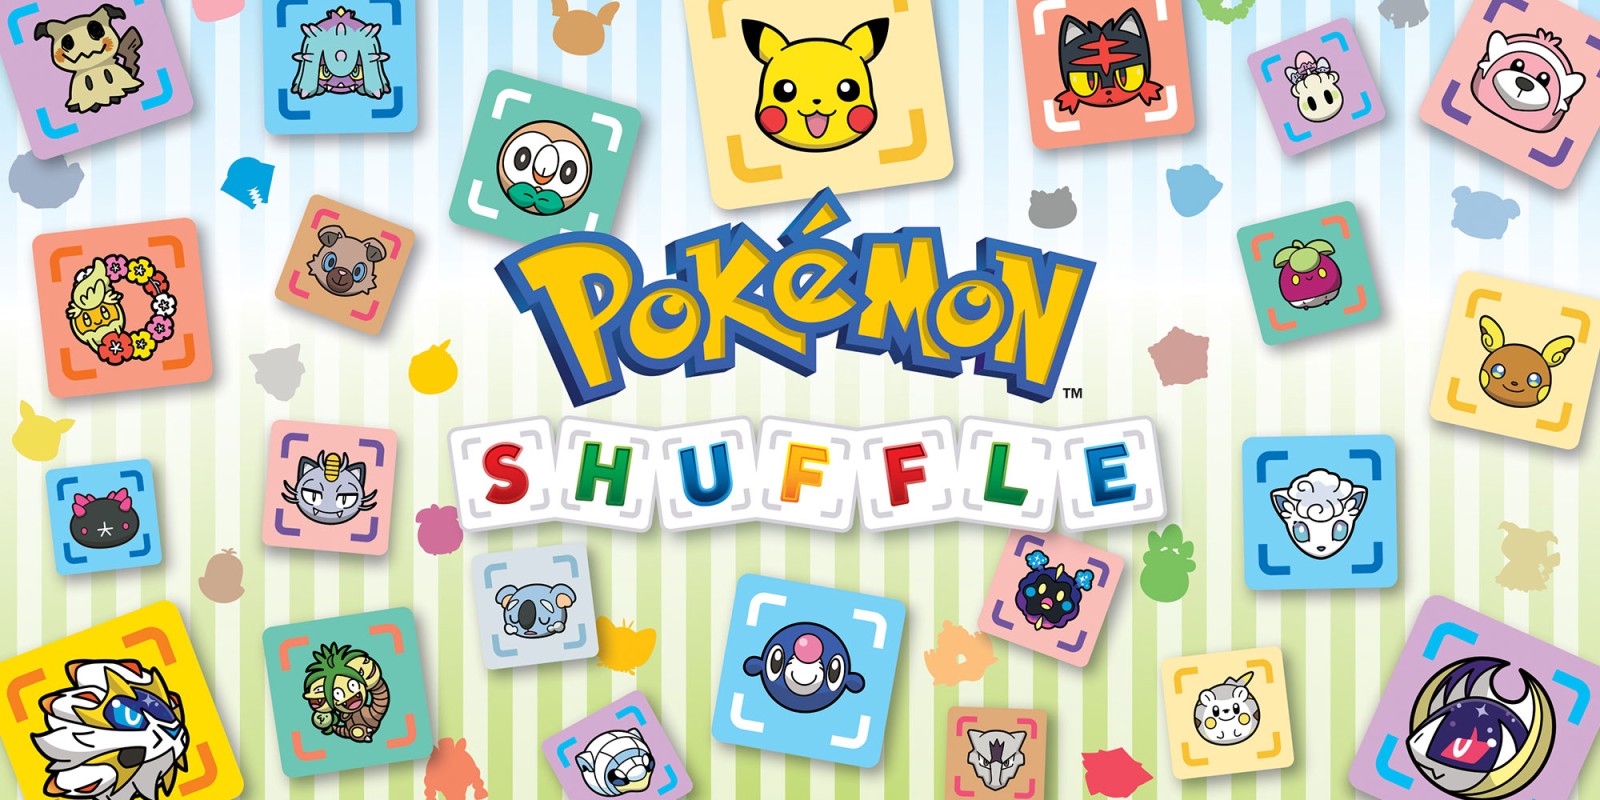 Pokemon Shuffle update (04/17/18)